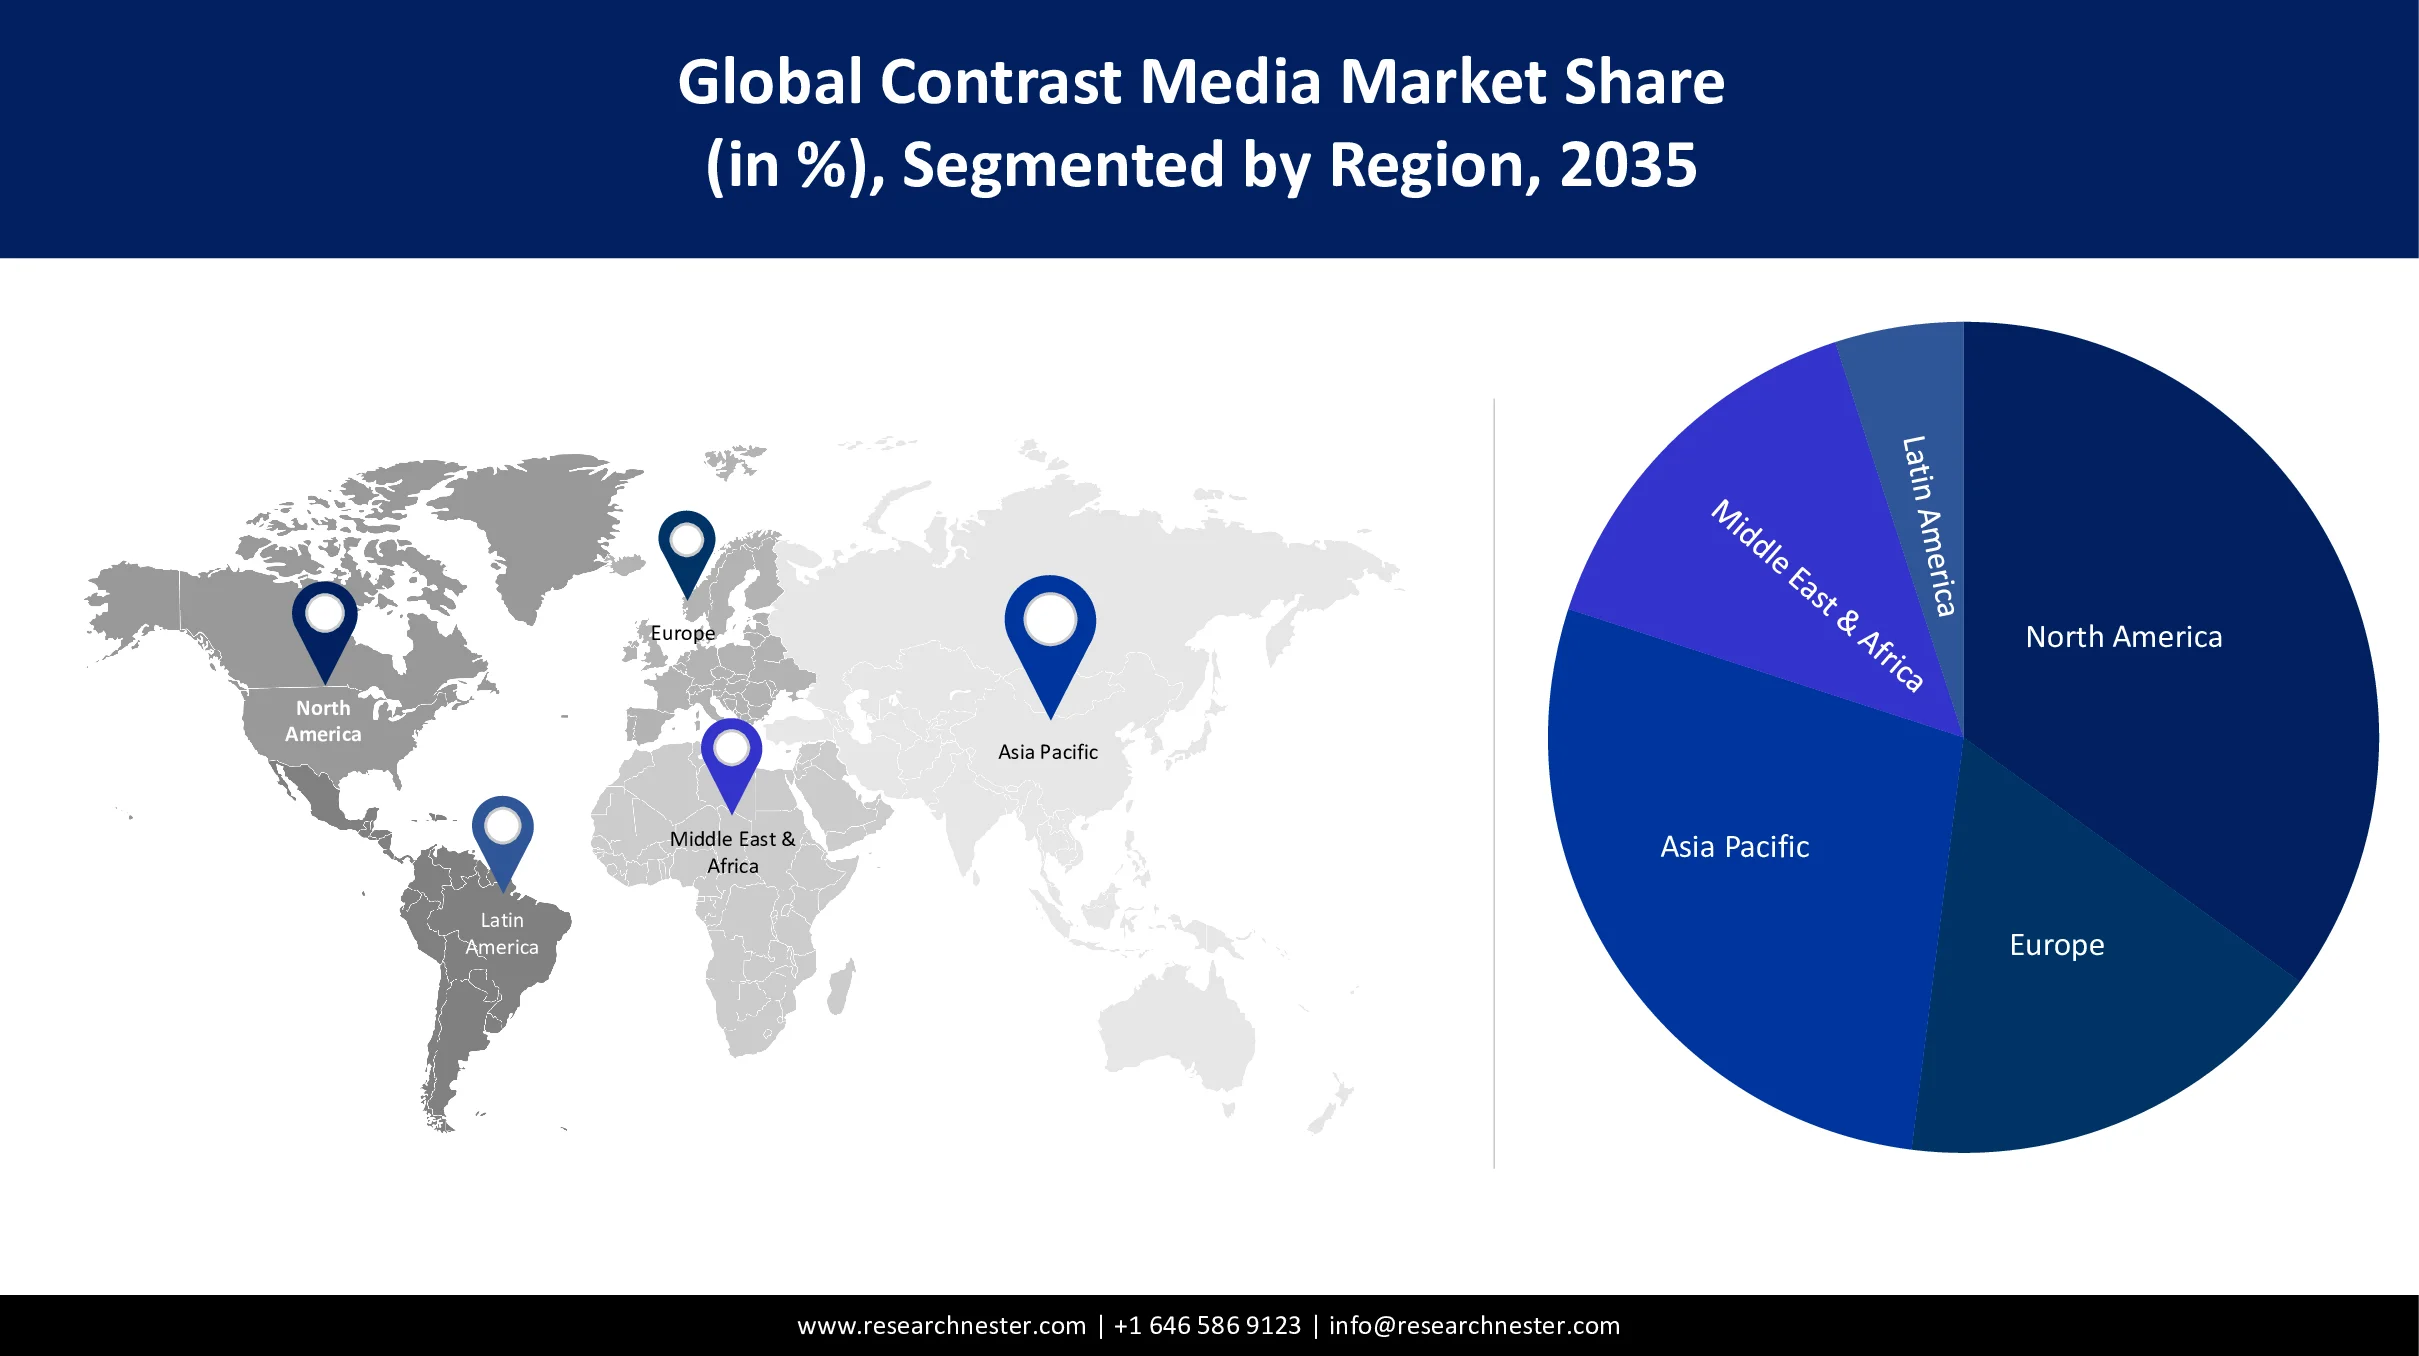 Contrast Media Market Size